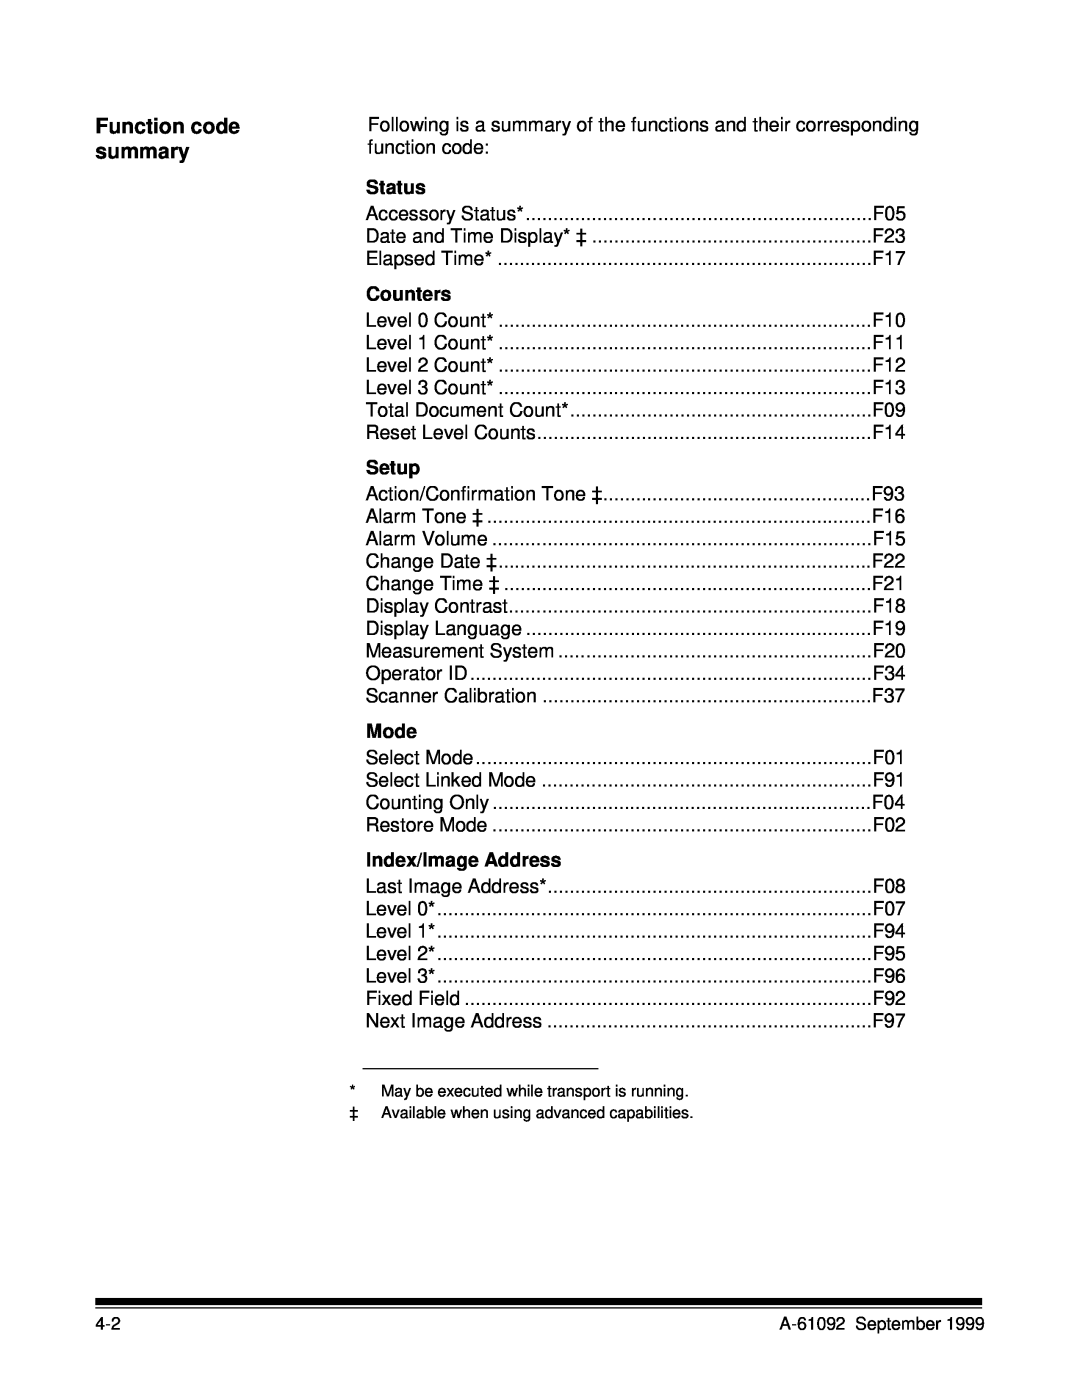 Kodak A-61092 manual Function code summary, Status, Counters, Setup, Mode, Index/Image Address 